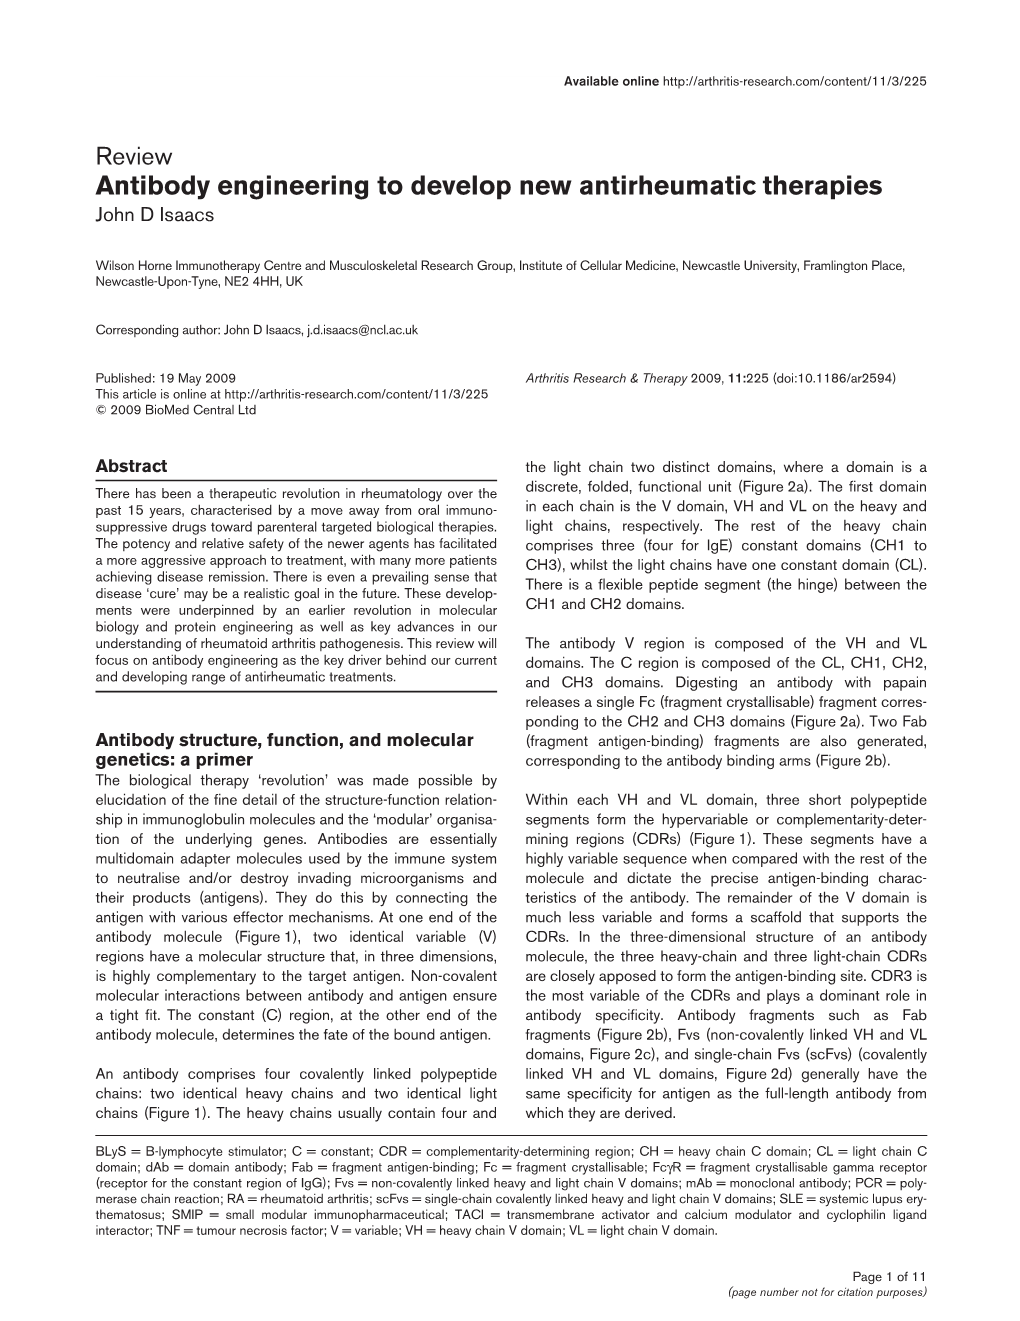 Antibody Engineering to Develop New Antirheumatic Therapies John D Isaacs